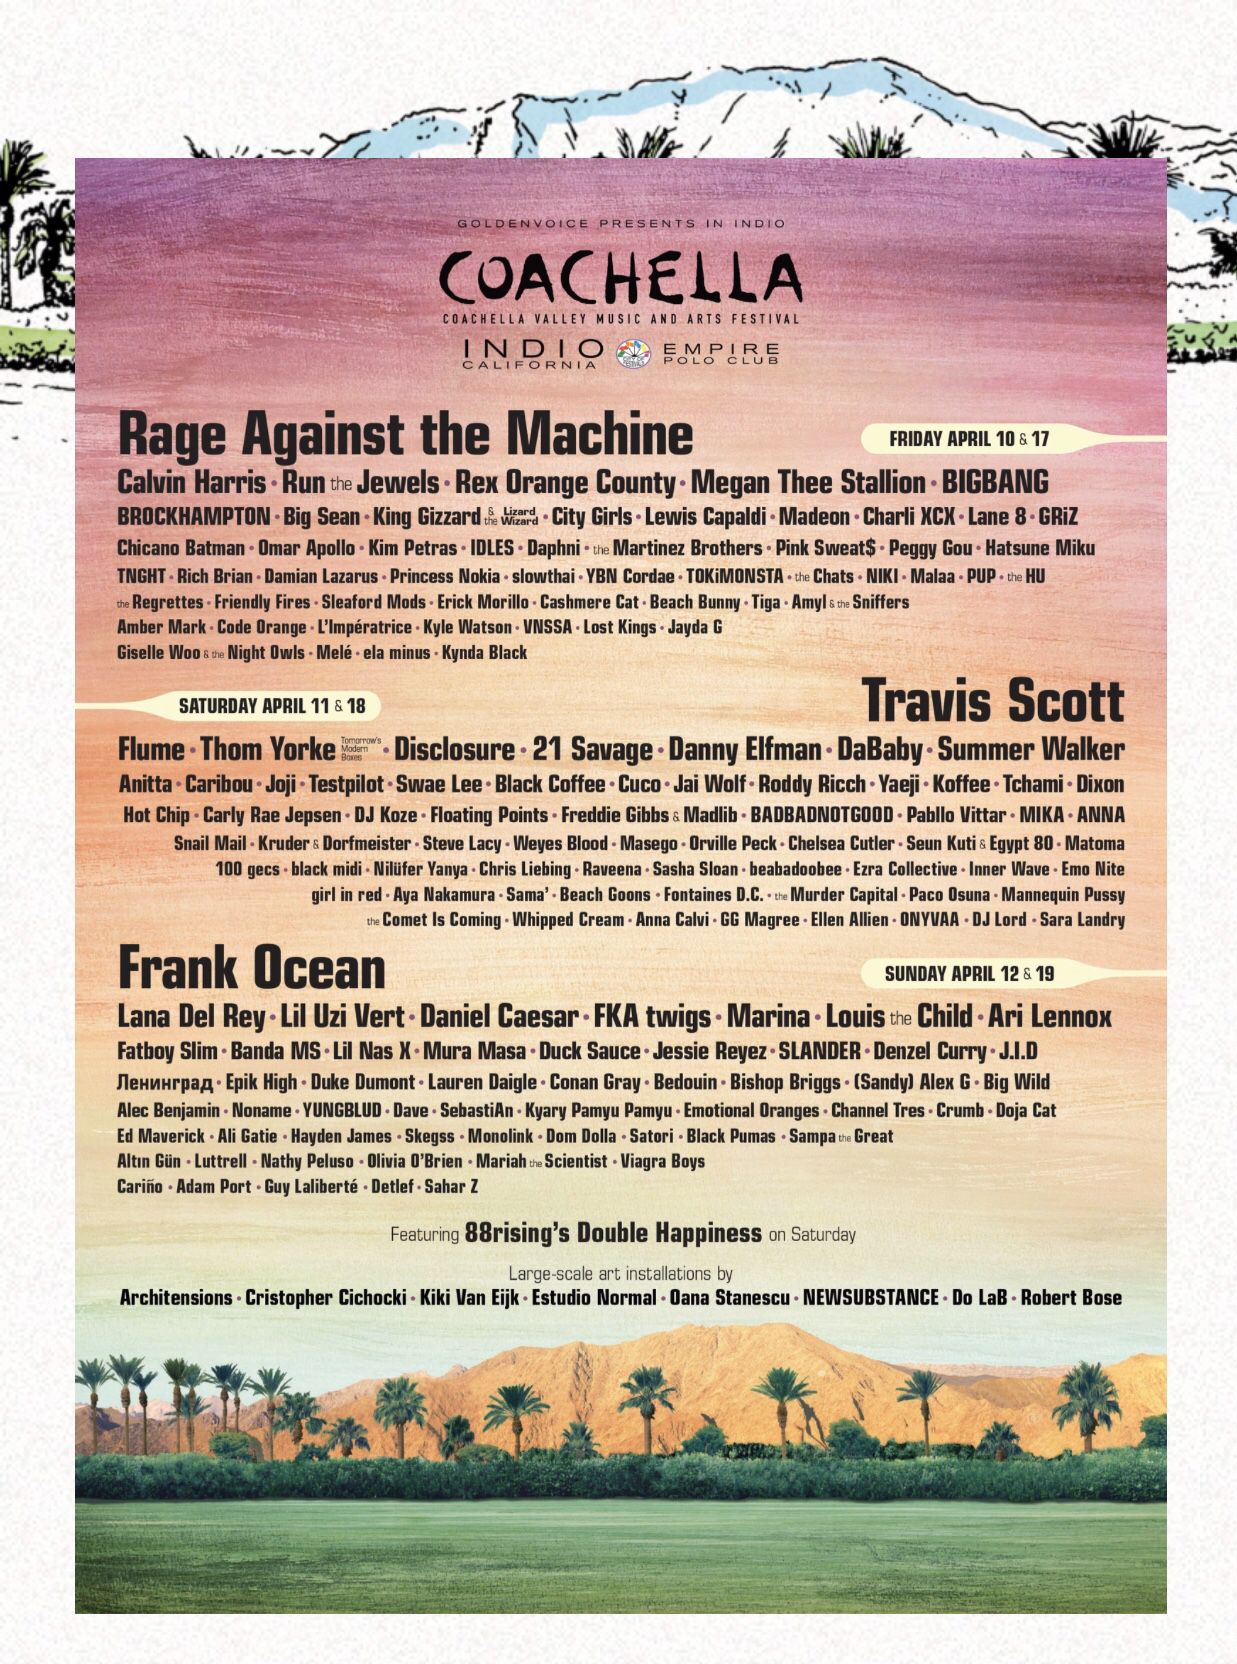 Coachella Tickets!